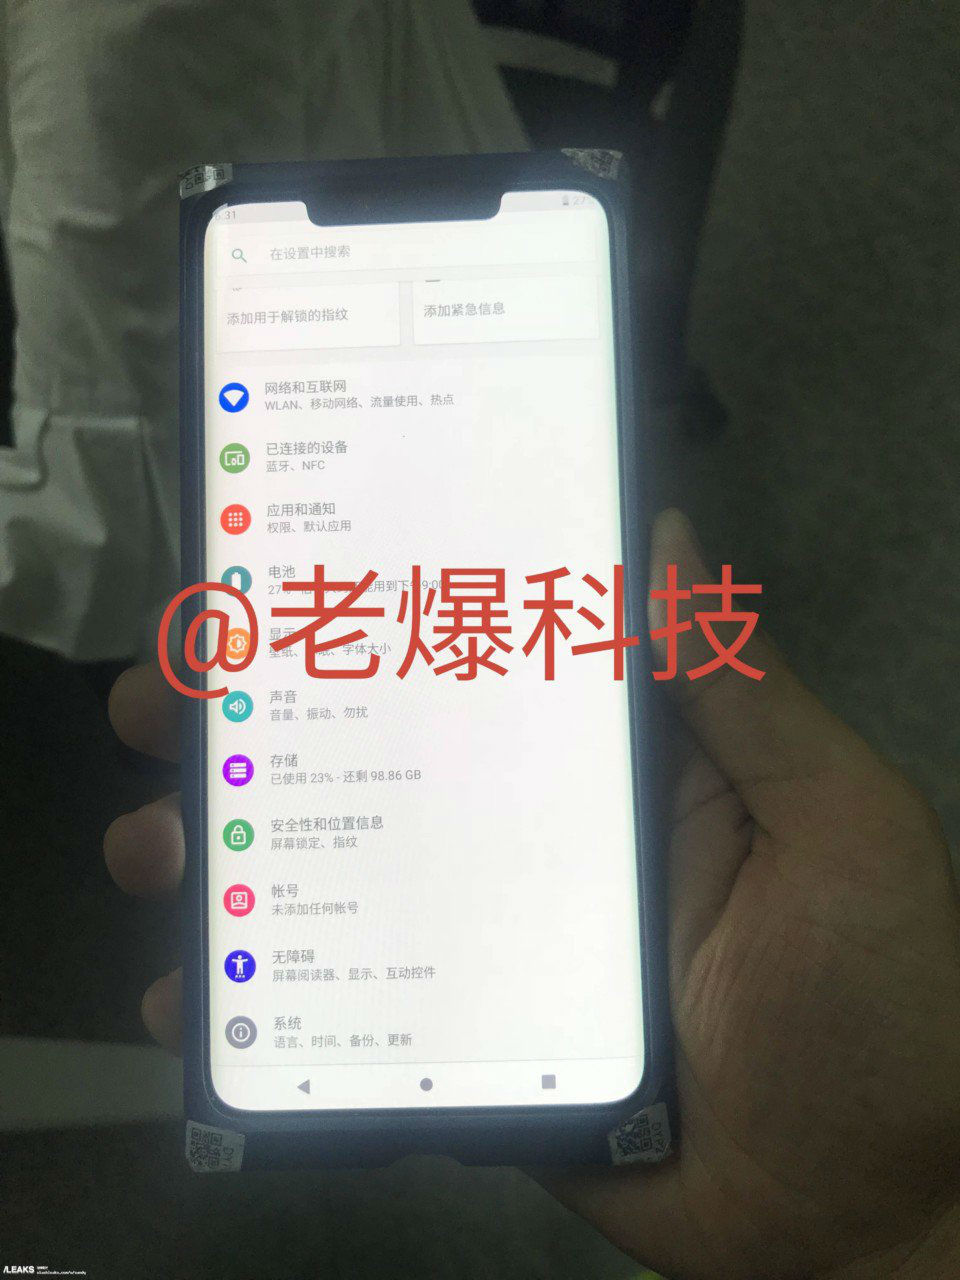 Huawei Mate 20 Pro